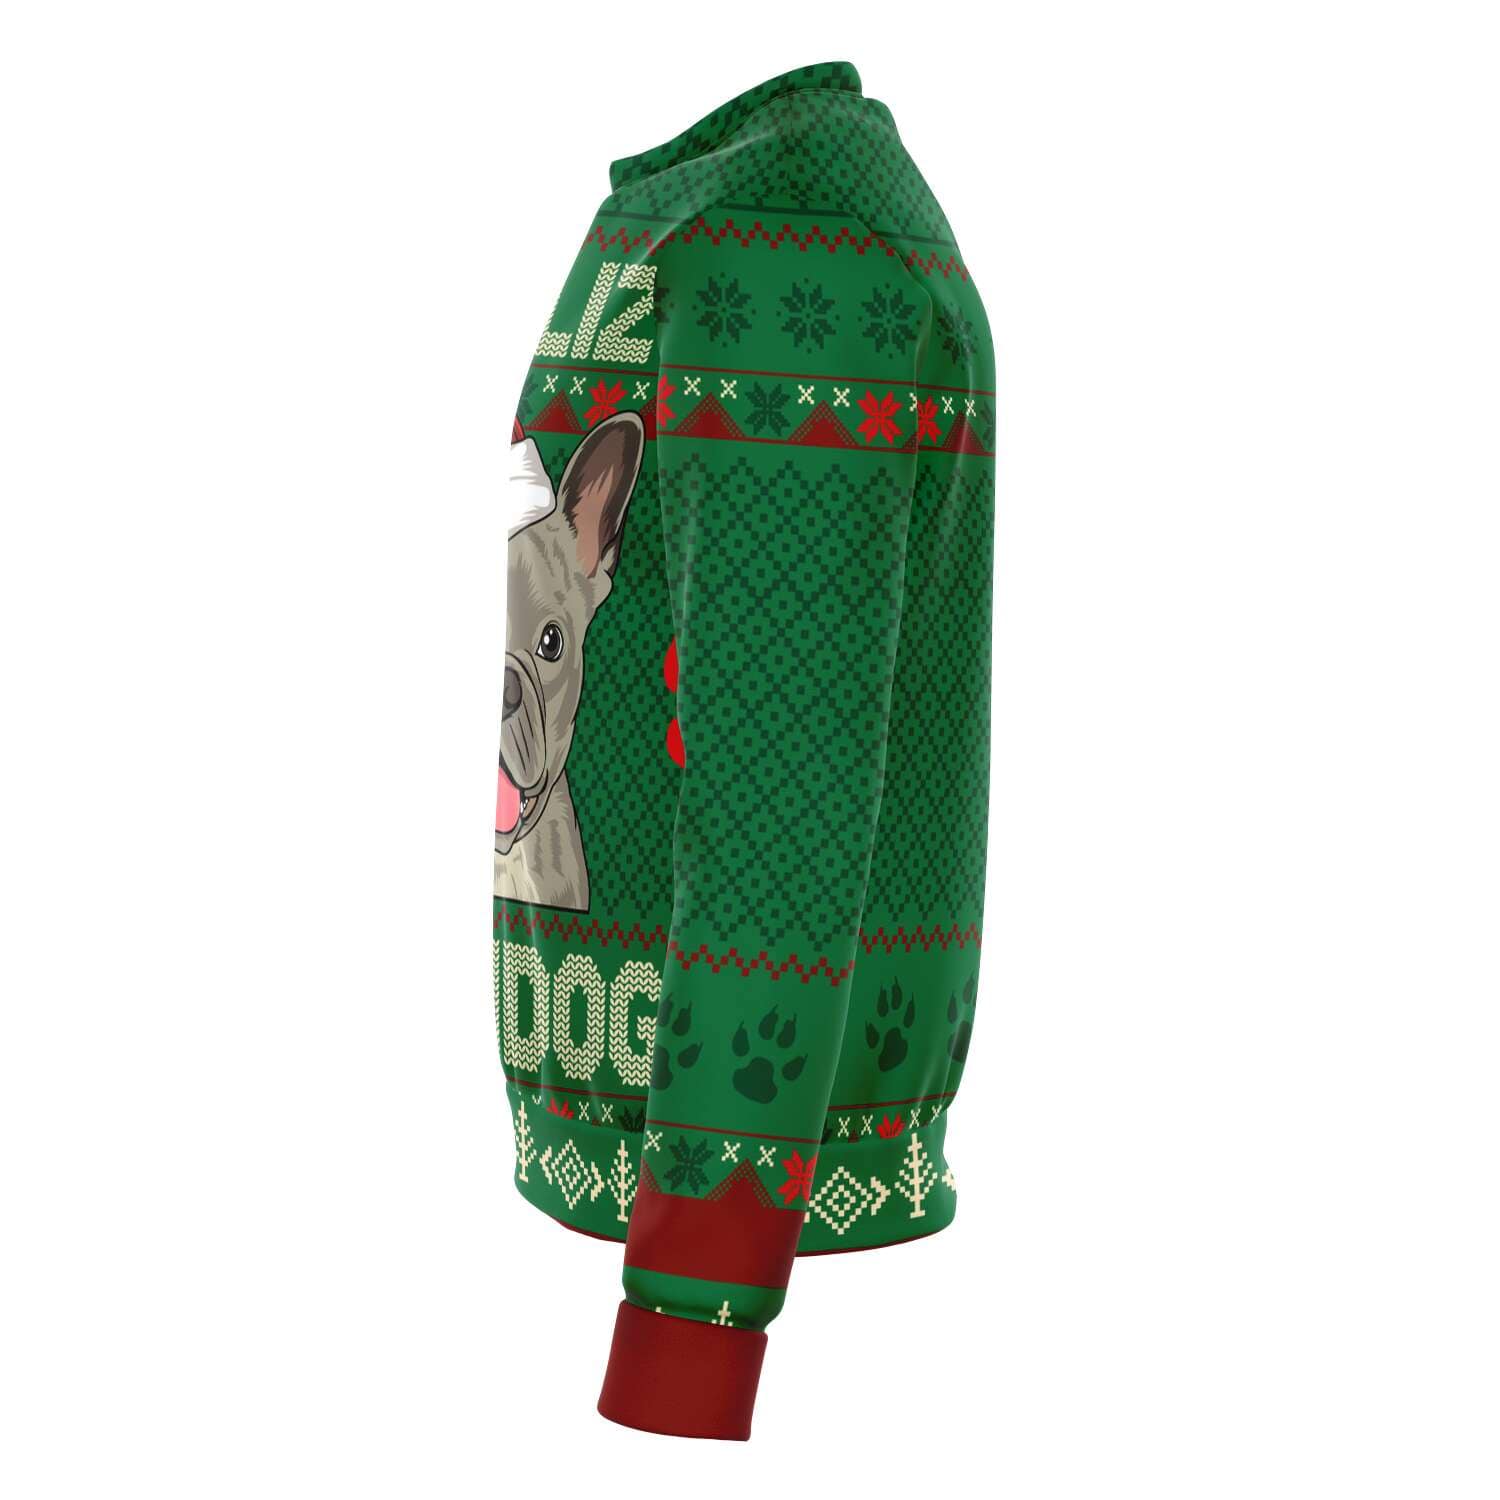 SUBLIMINATOR Feliz Navidog French Bulldog Ugly Christmas Sweaters Sweatshirt